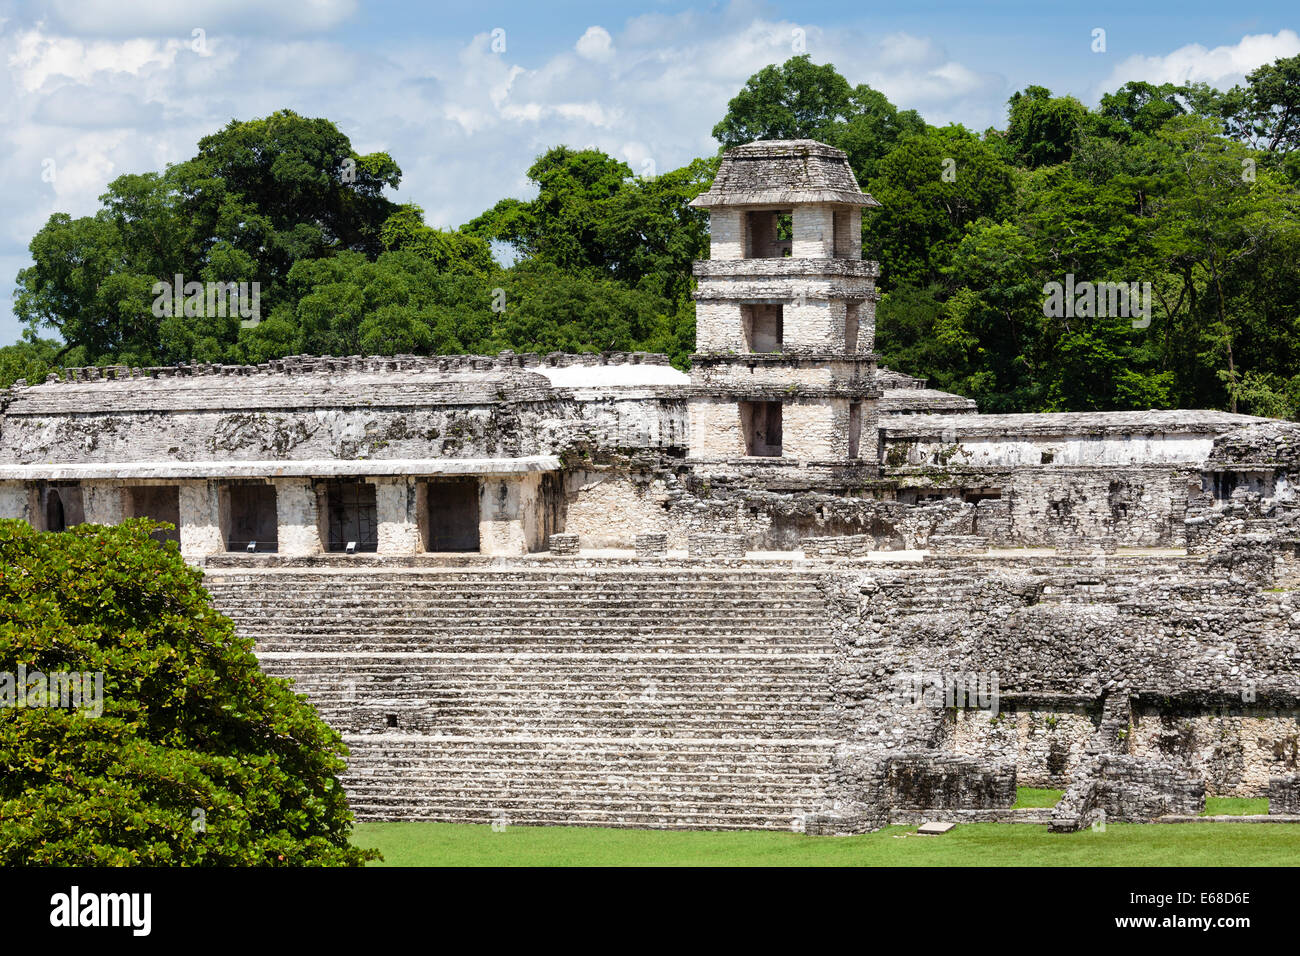 The Palace at the Mayan ruins of Palenque, Chiapas, Mexico. Stock Photo